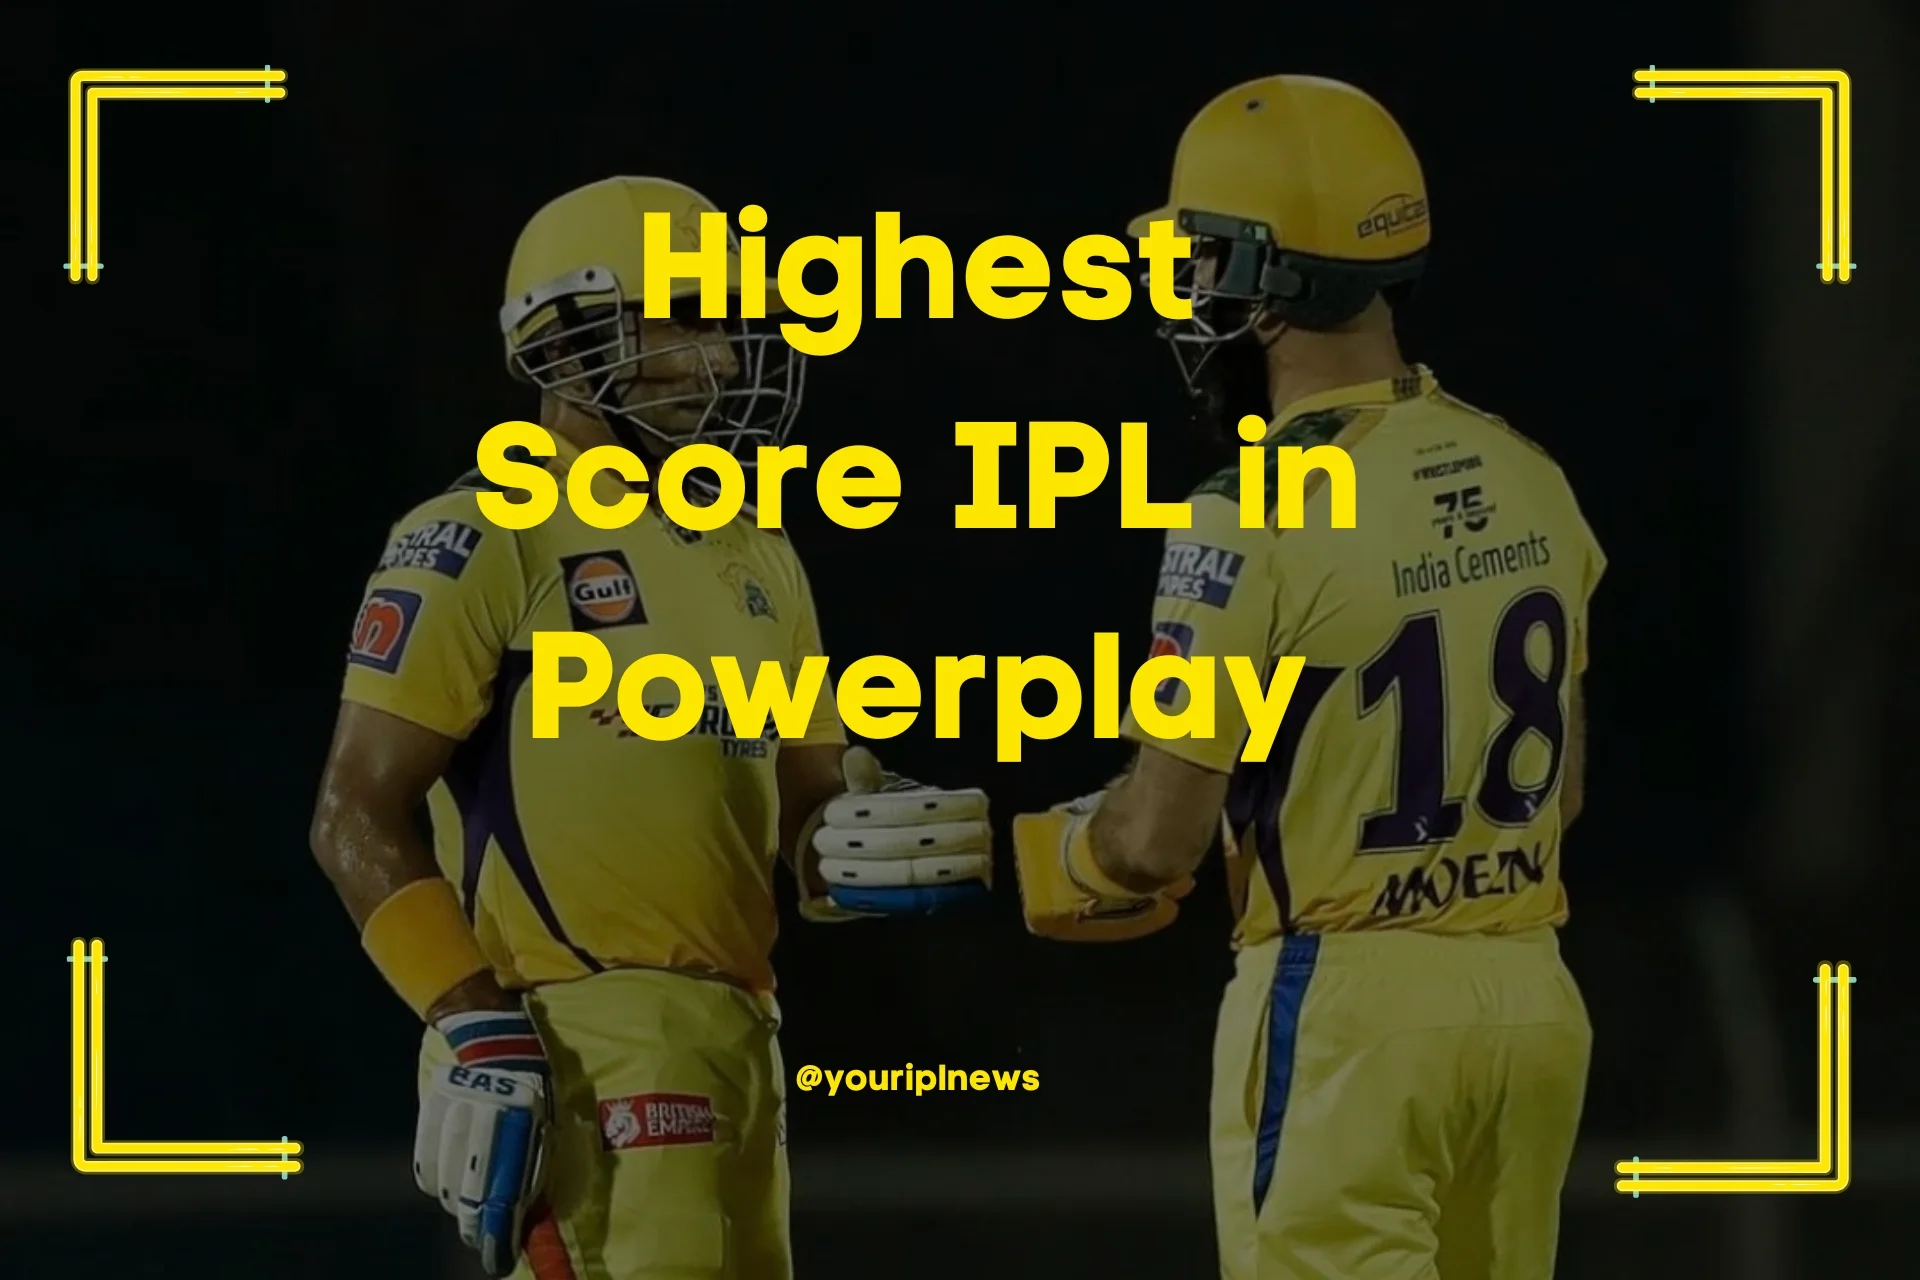 Highest Score IPL in Powerplay